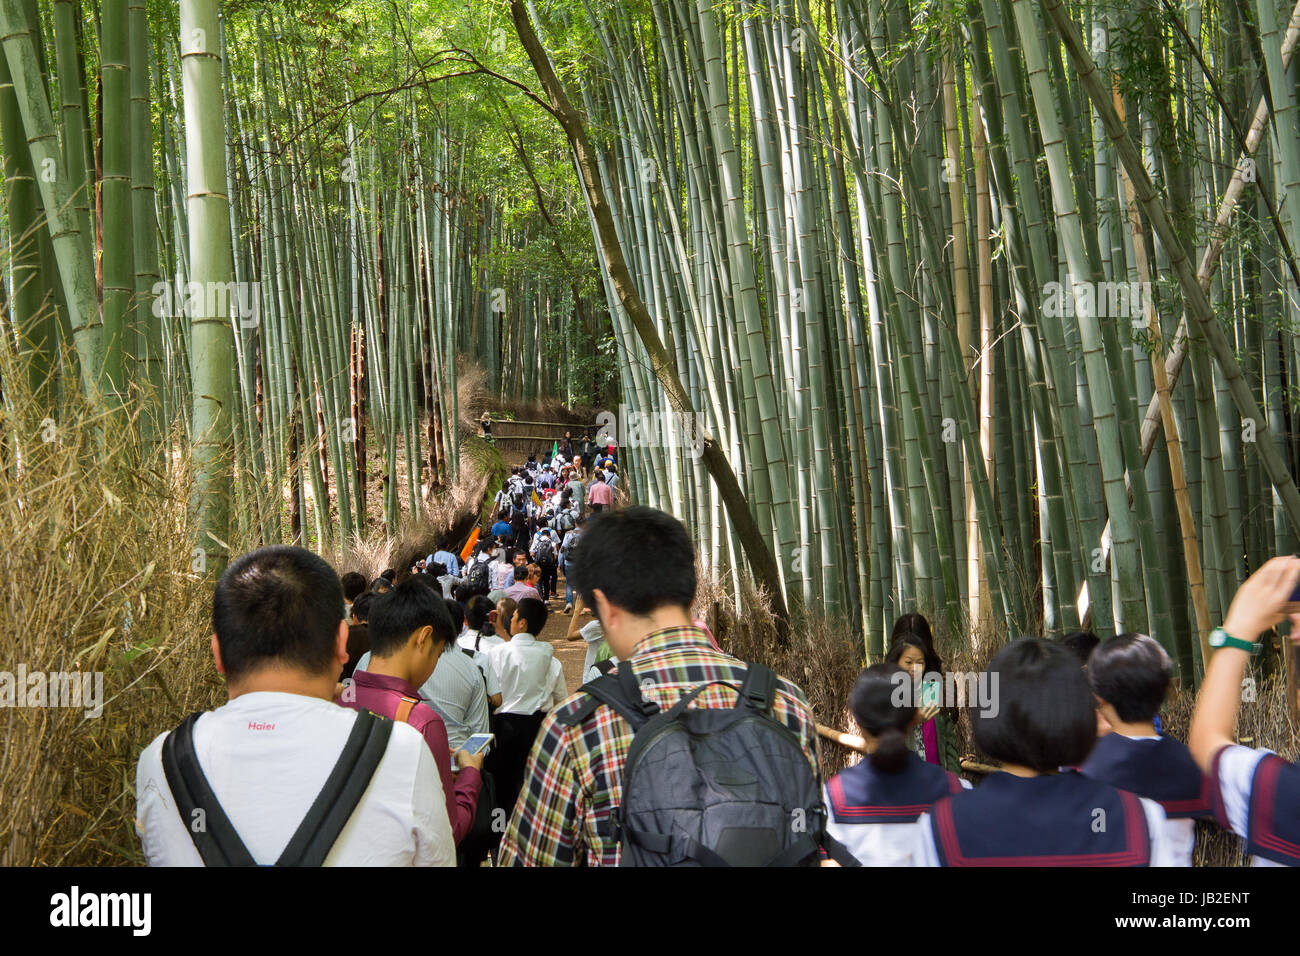 japon - LE JAPON ! un jour j'irai !!! - Page 26 Tourists-in-bamboo-forest-in-arashiyama-kyoto-japan-JB2ENT